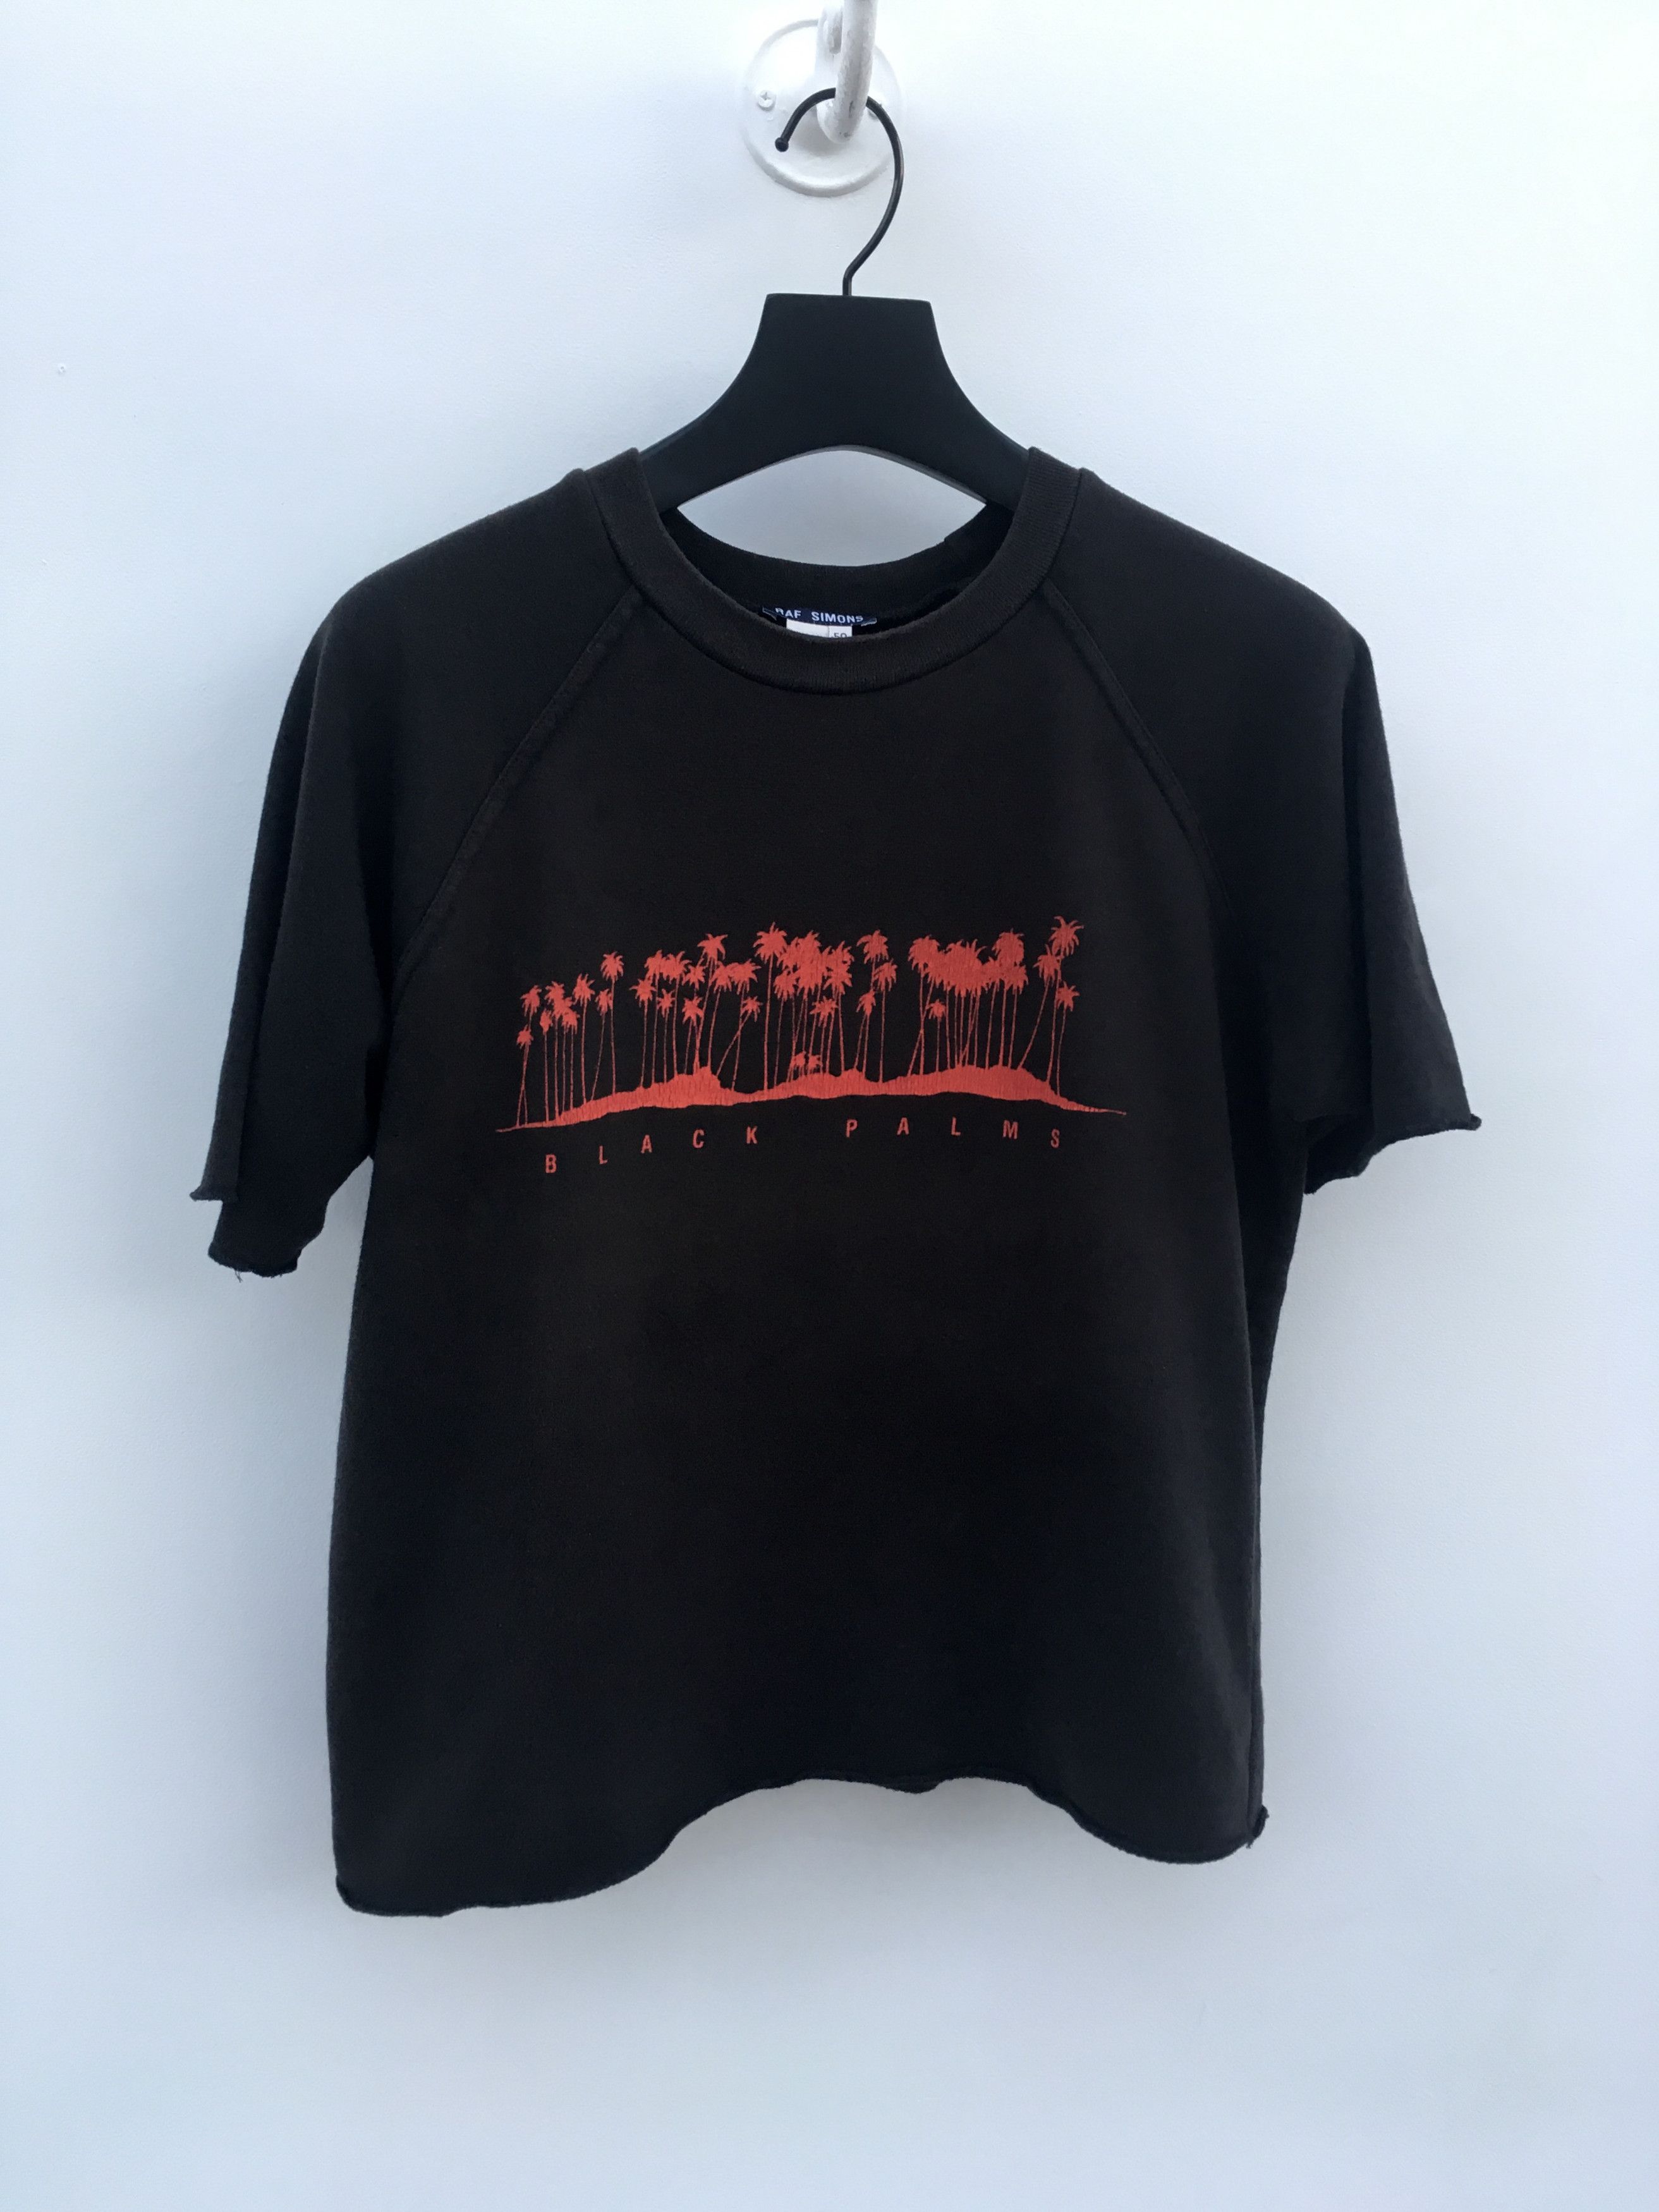 Raf Simons S/S 1998 The Black Palms logo sweatshirt | Grailed